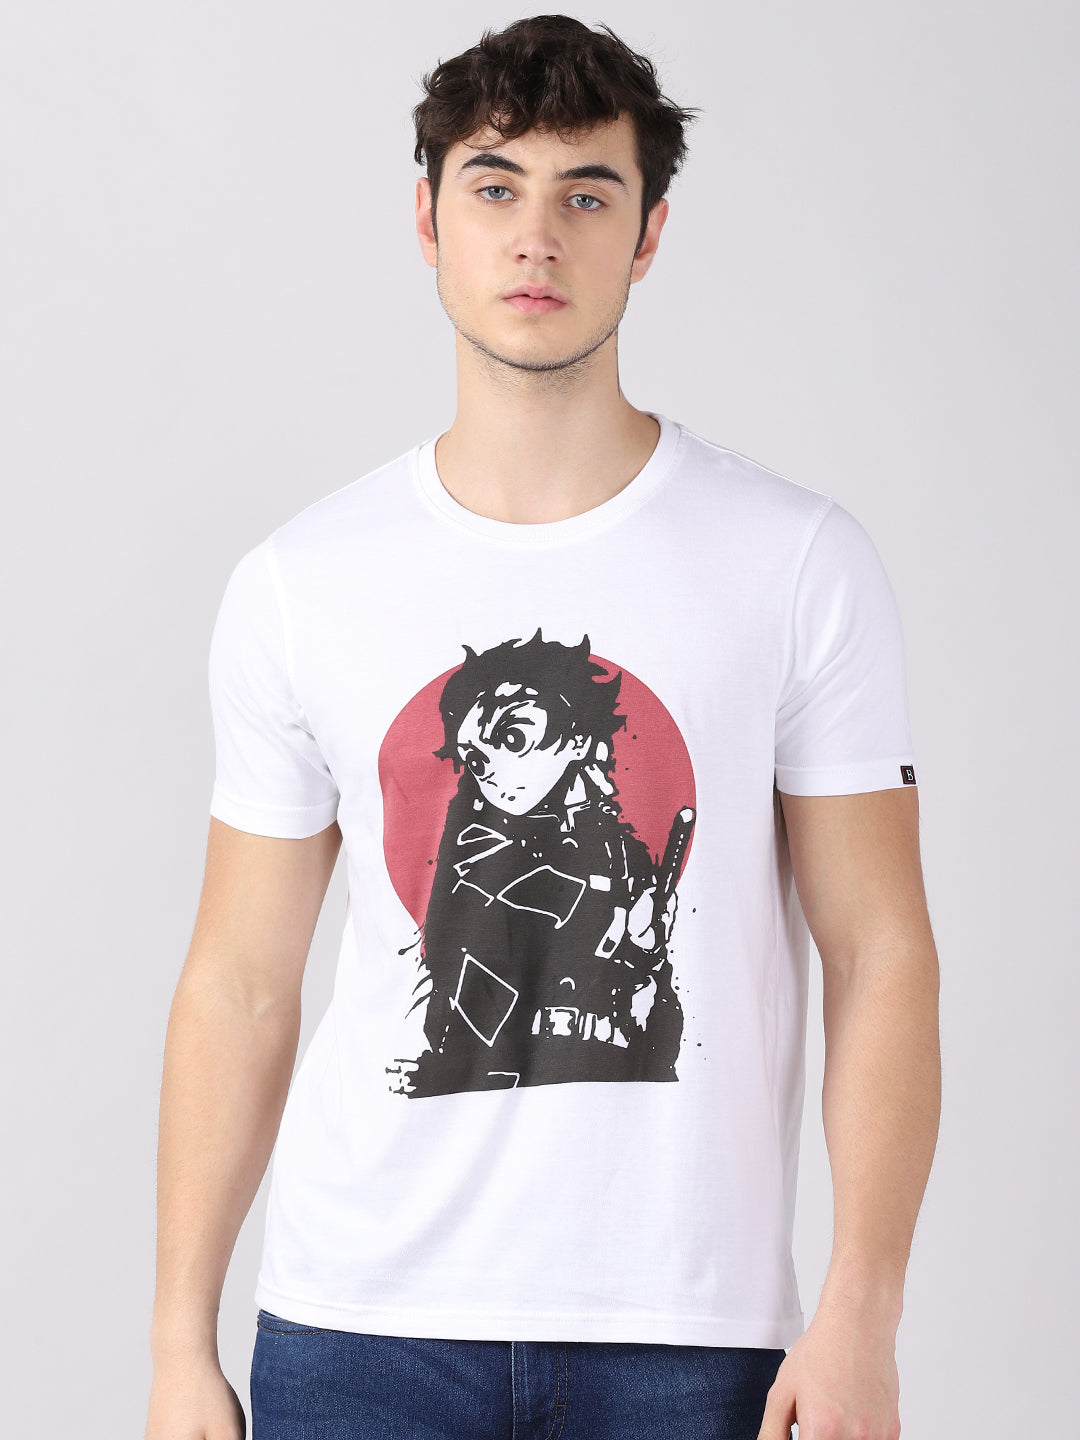 Tanjiro - Demon Slayer Anime T-Shirt Graphic T-Shirts Bushirt   